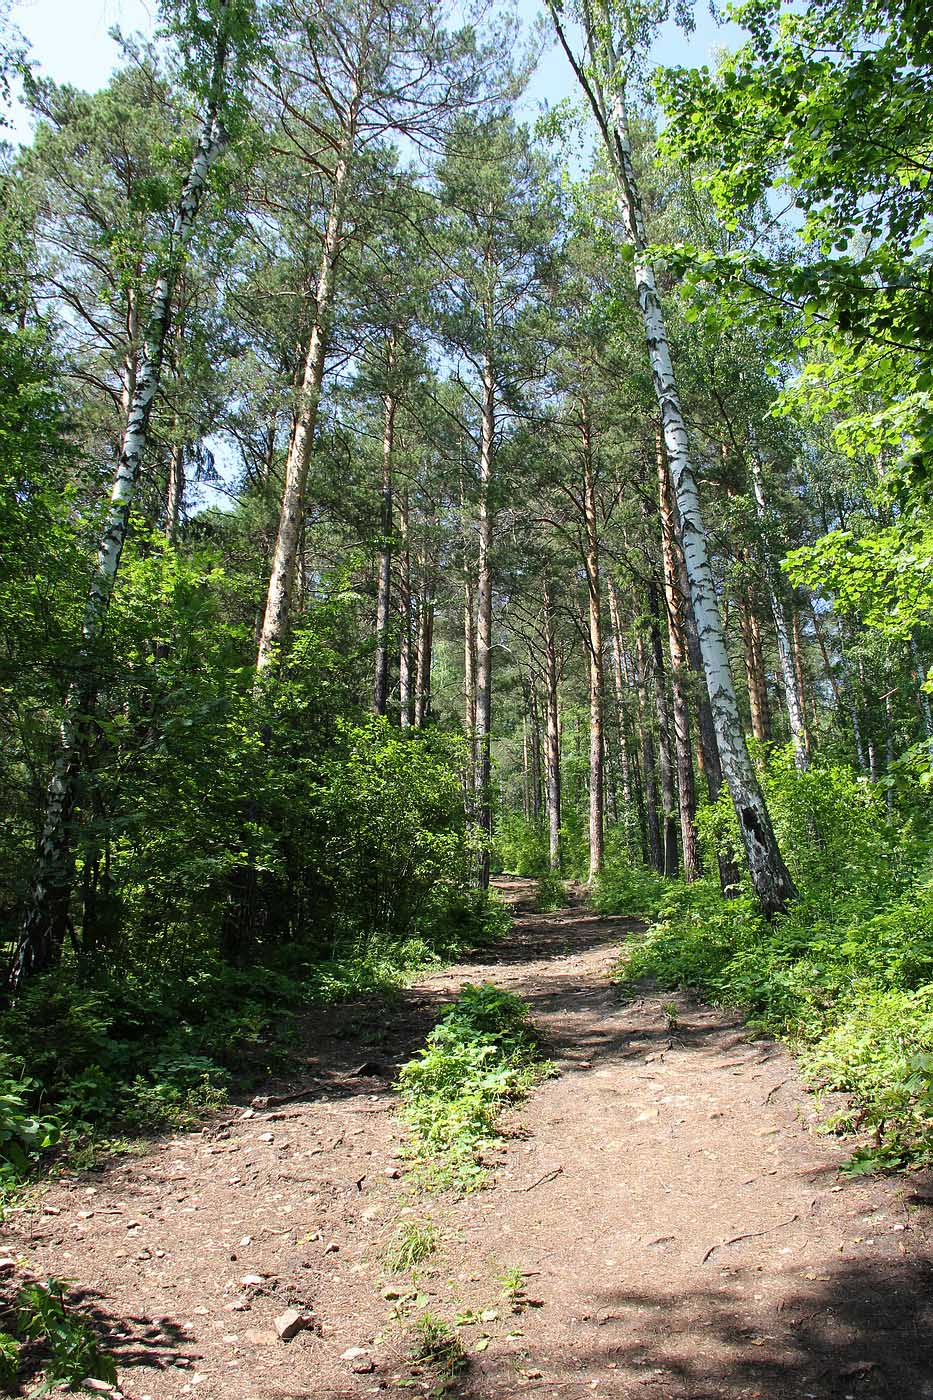 Окрестности Камня Ермак, image of landscape/habitat.